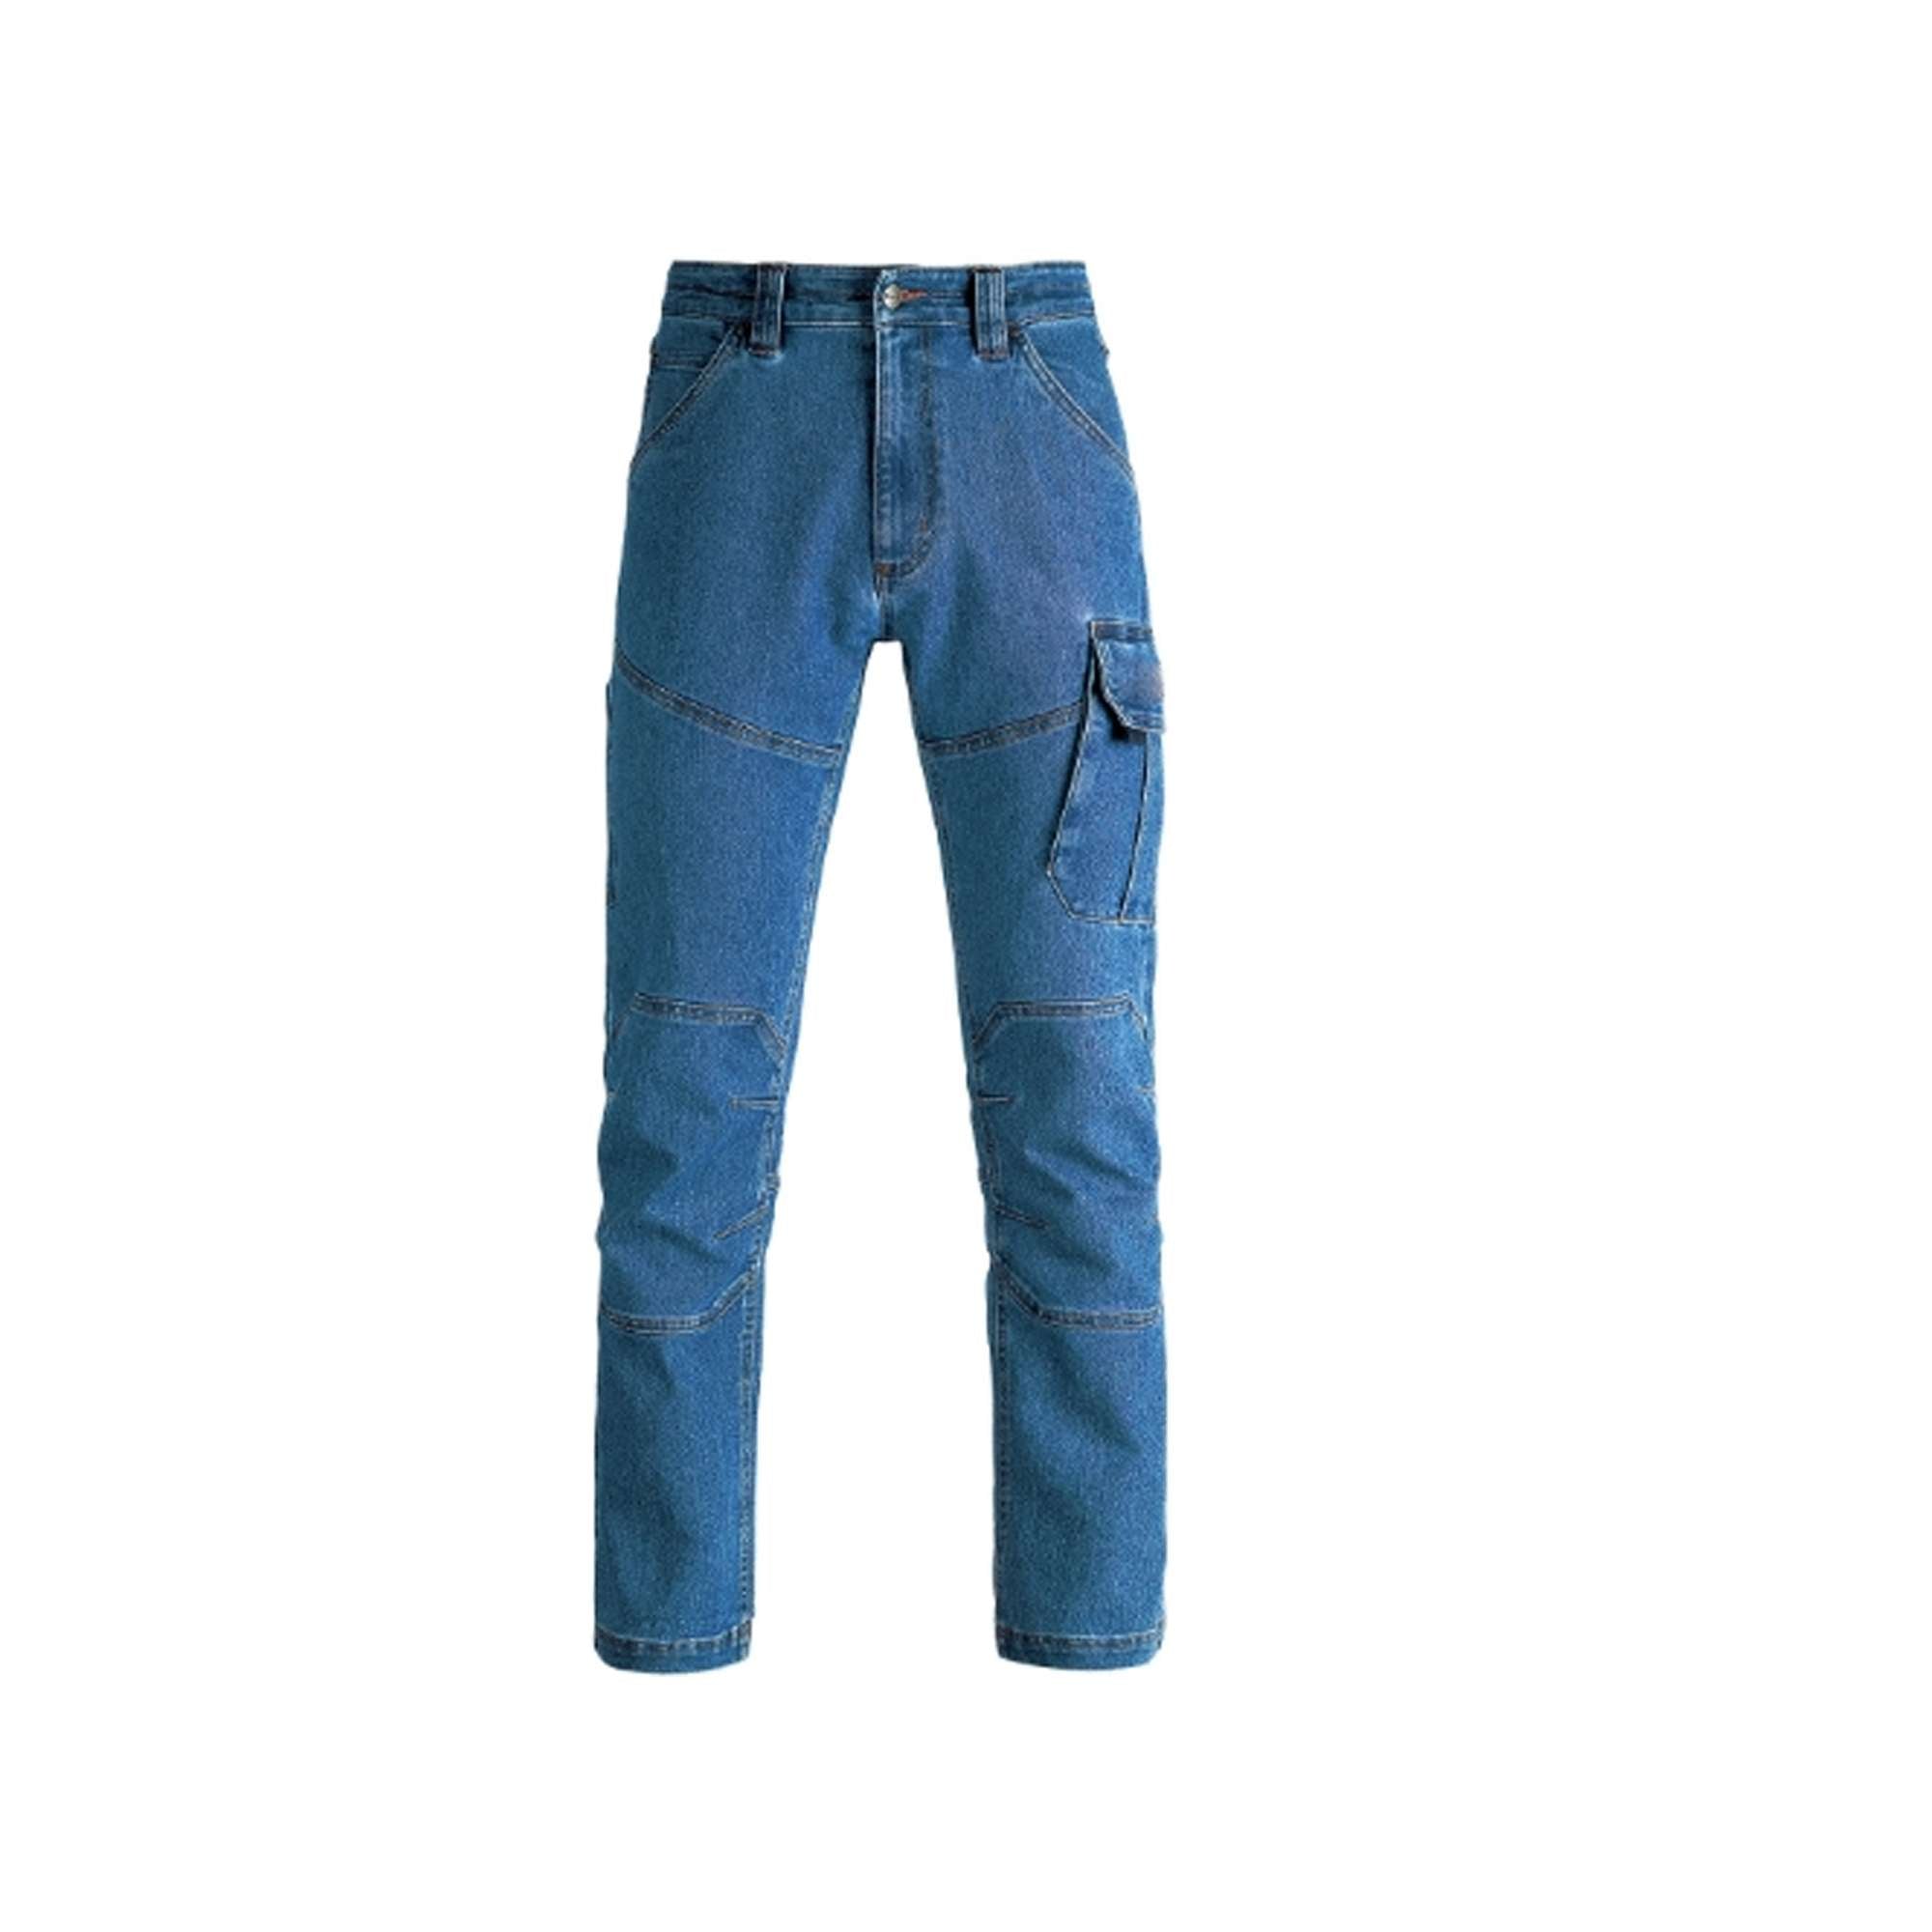 NIMES jeans trousers Size (S/M/L) 36810/1/3 Kapriol